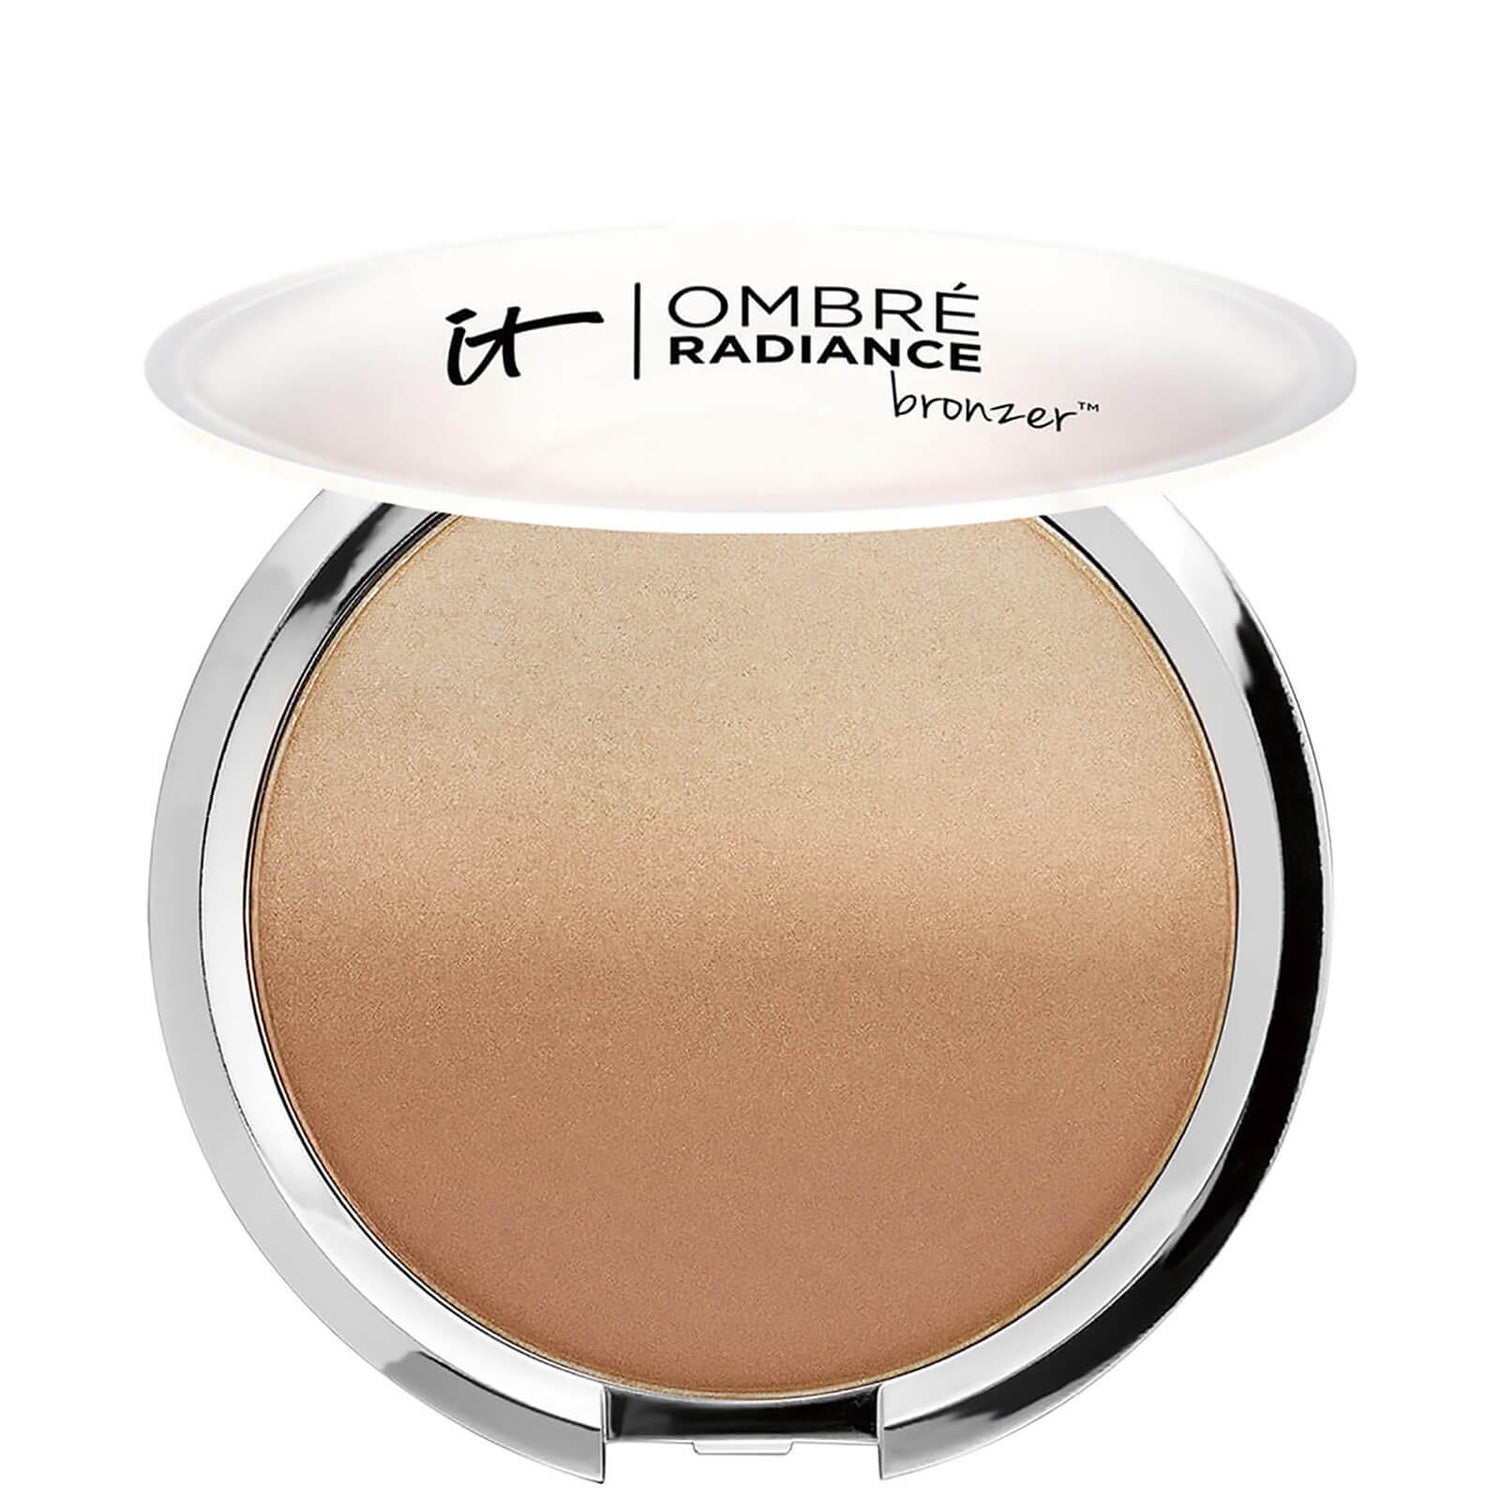 IT Cosmetics Ombré Radiance Bronzer - Warm Radiance 16.17g